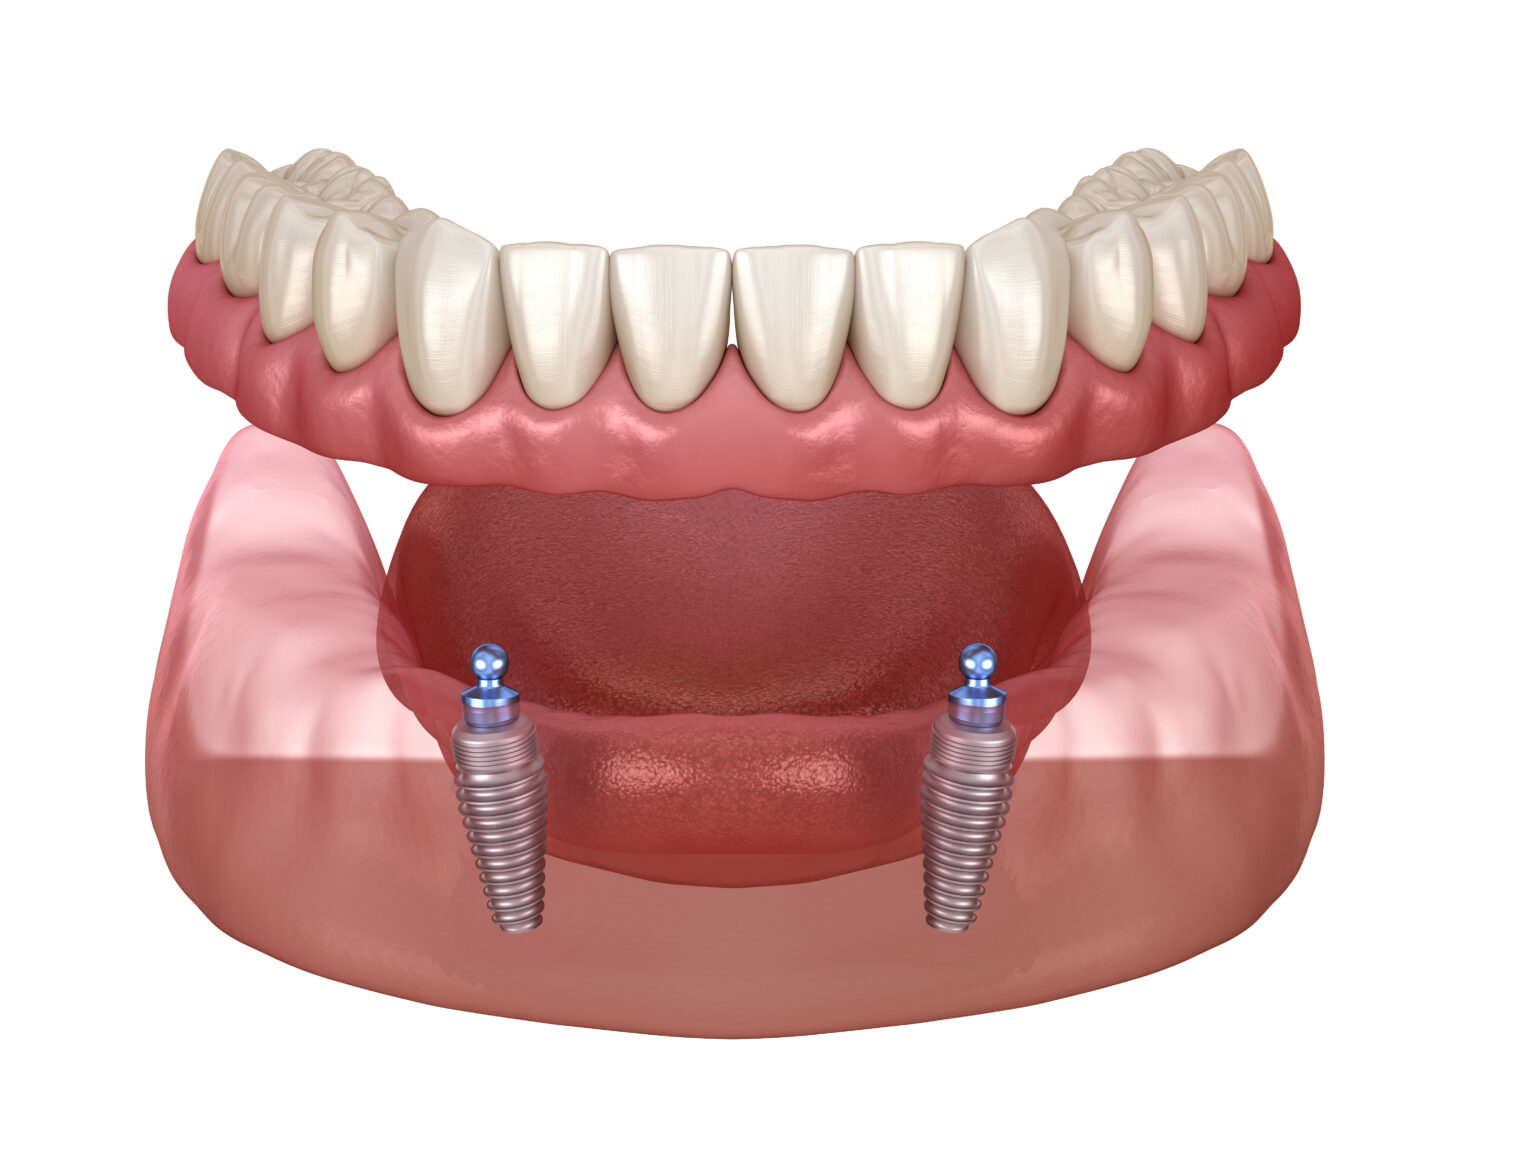 Implants For Dentures 1536x1169 